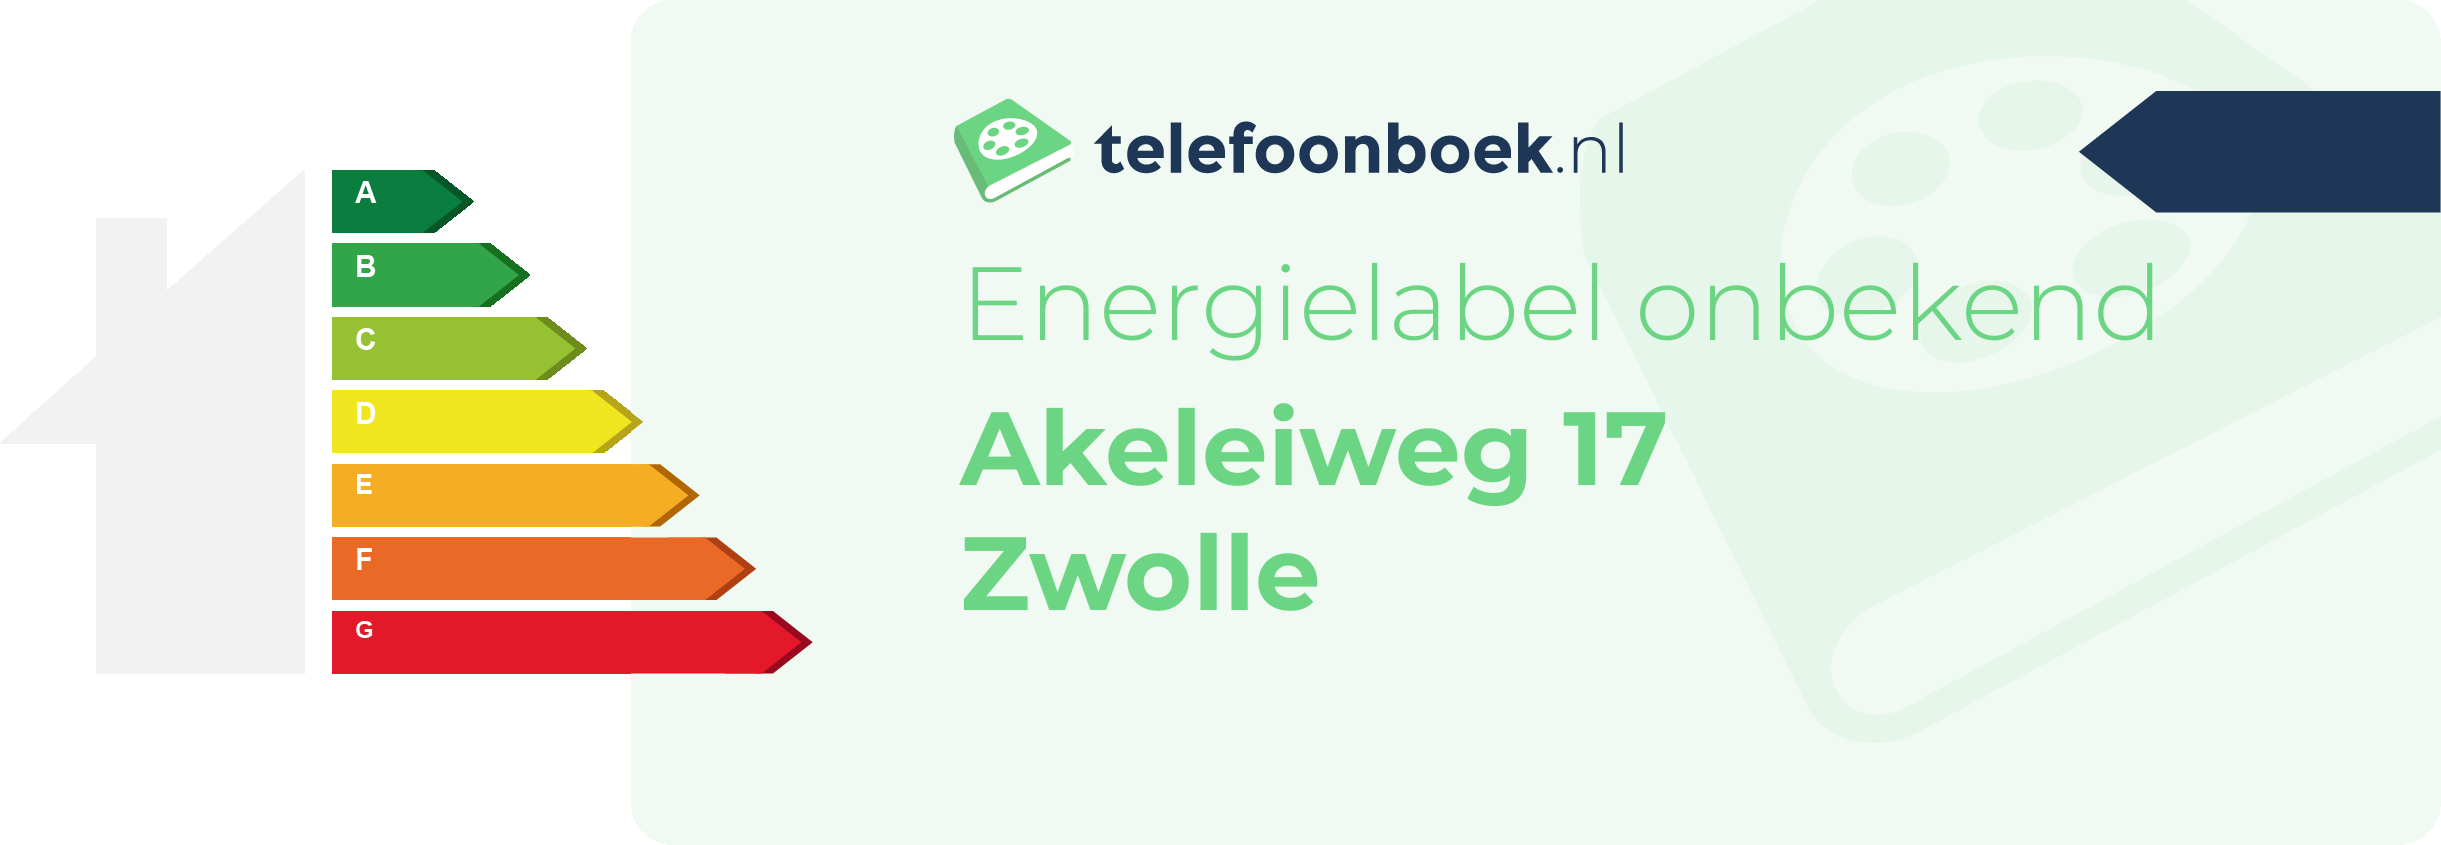 Energielabel Akeleiweg 17 Zwolle